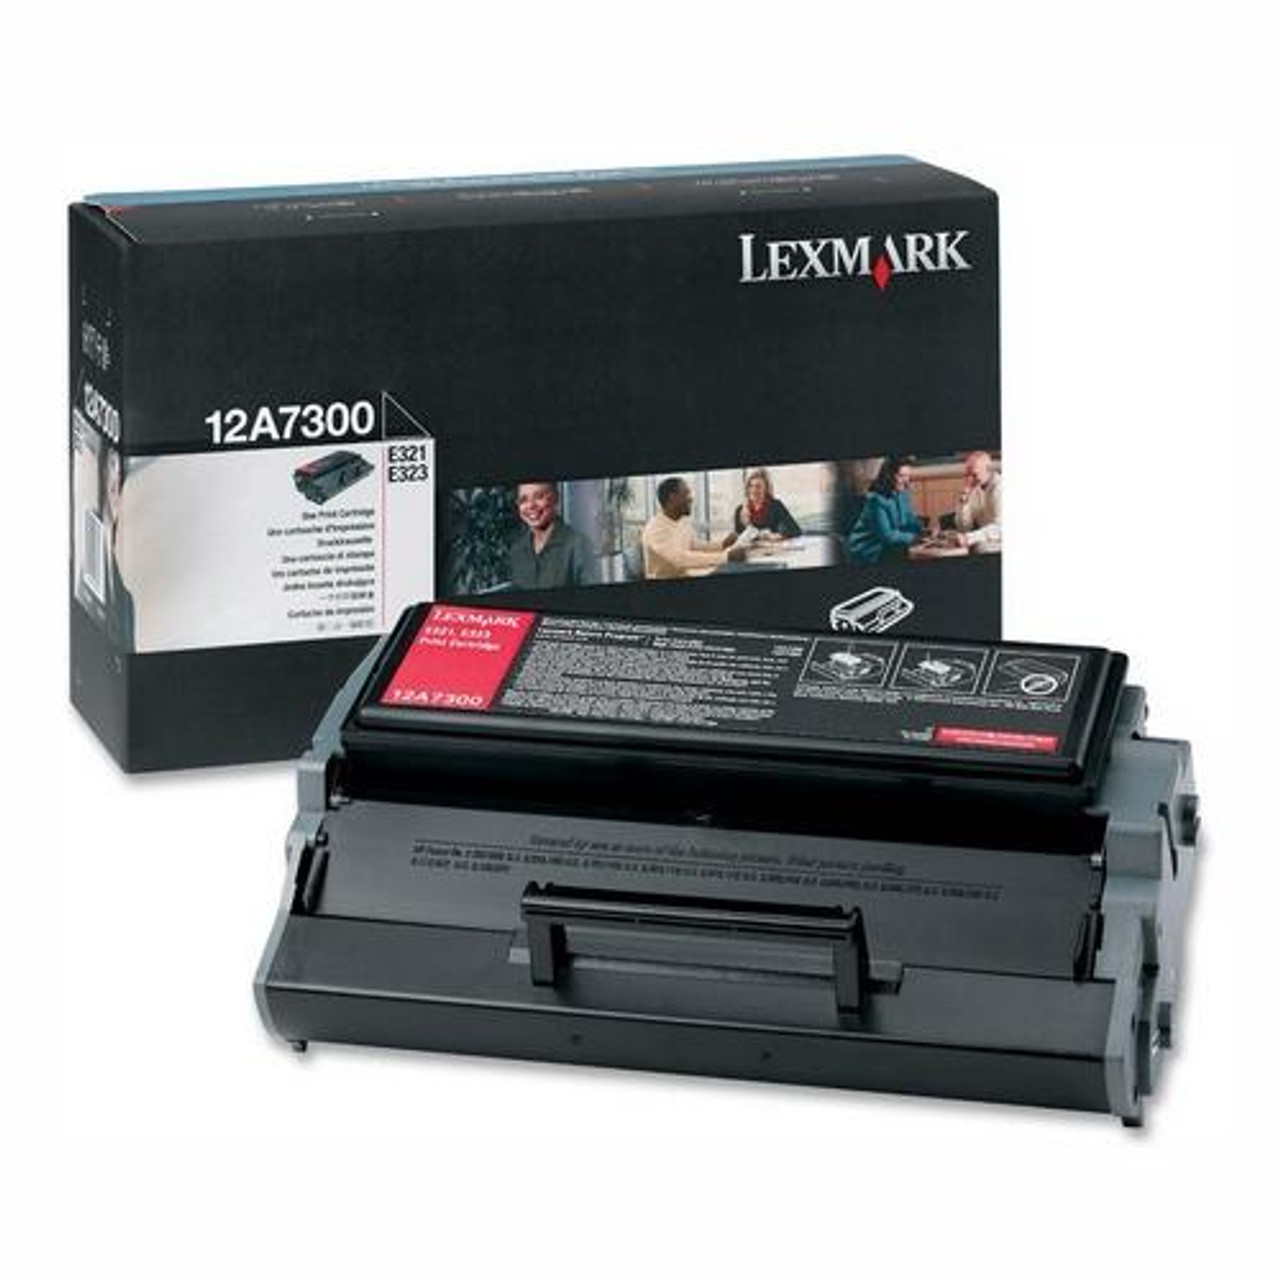 12A7300 Lexmark Printer Cart Toner